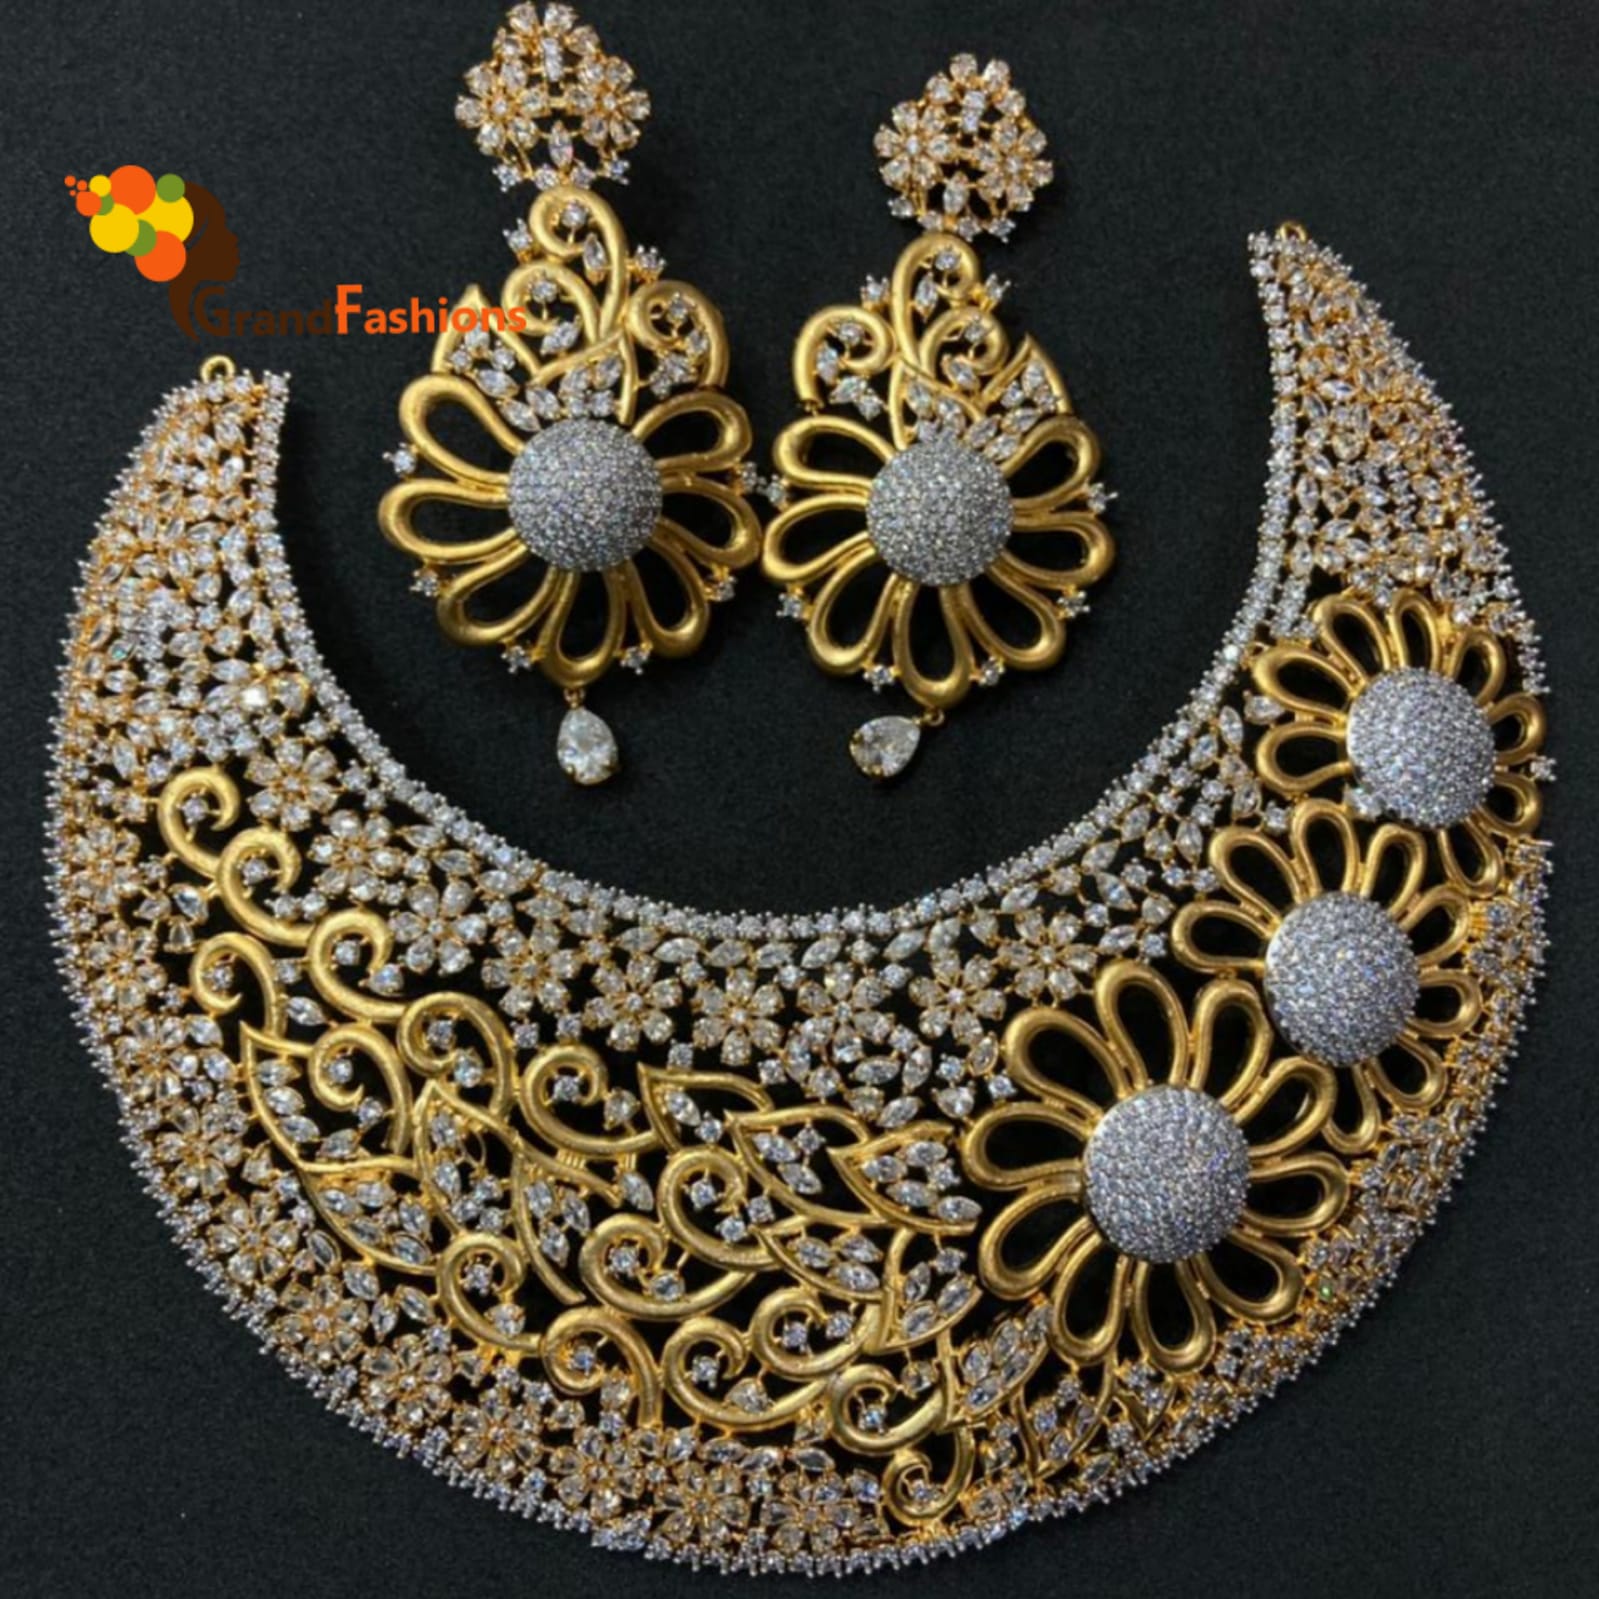 Queen Aminah Premium Luxury Necklace Set with Gemstones